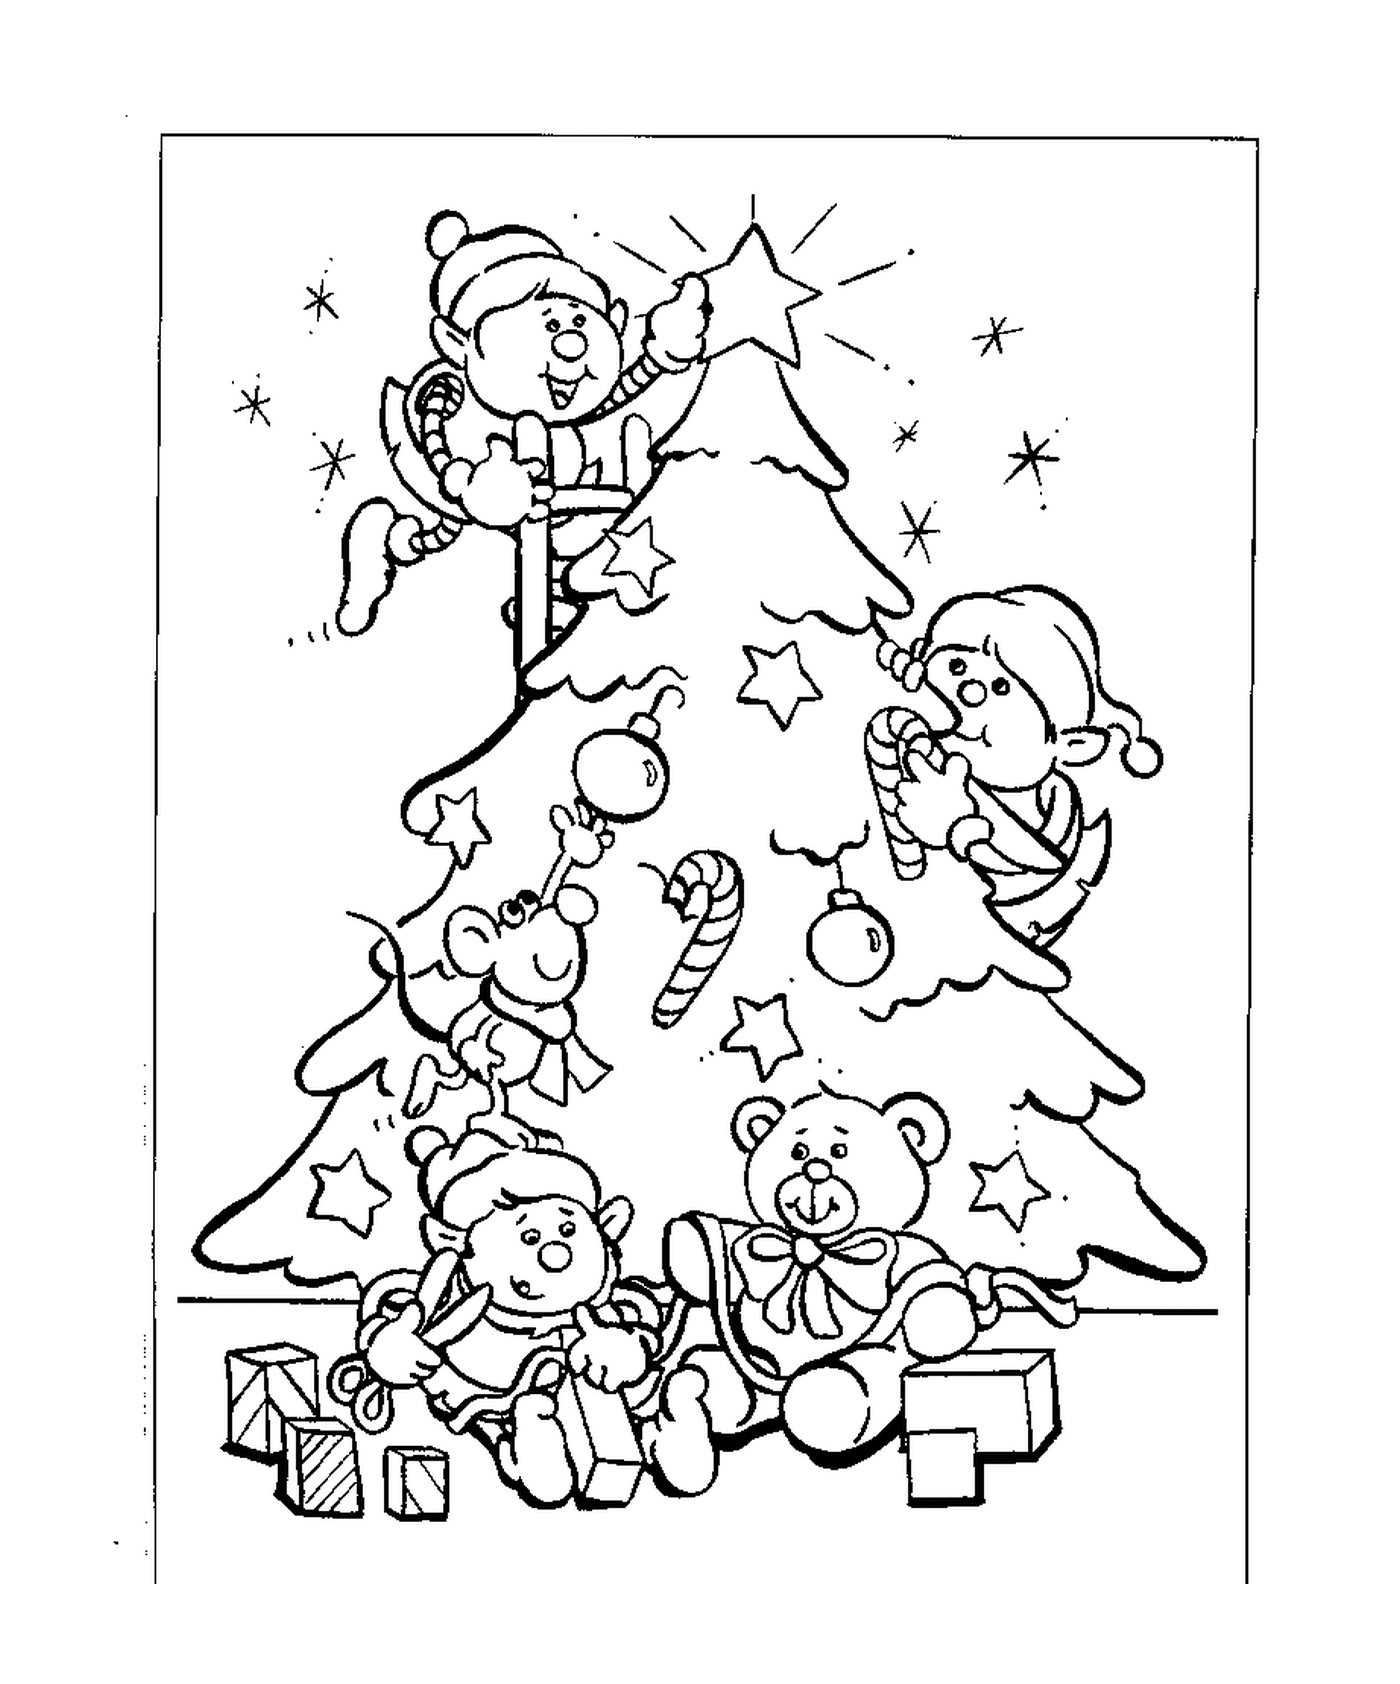  एक क्लासिक क्रिसमस पेड़ 